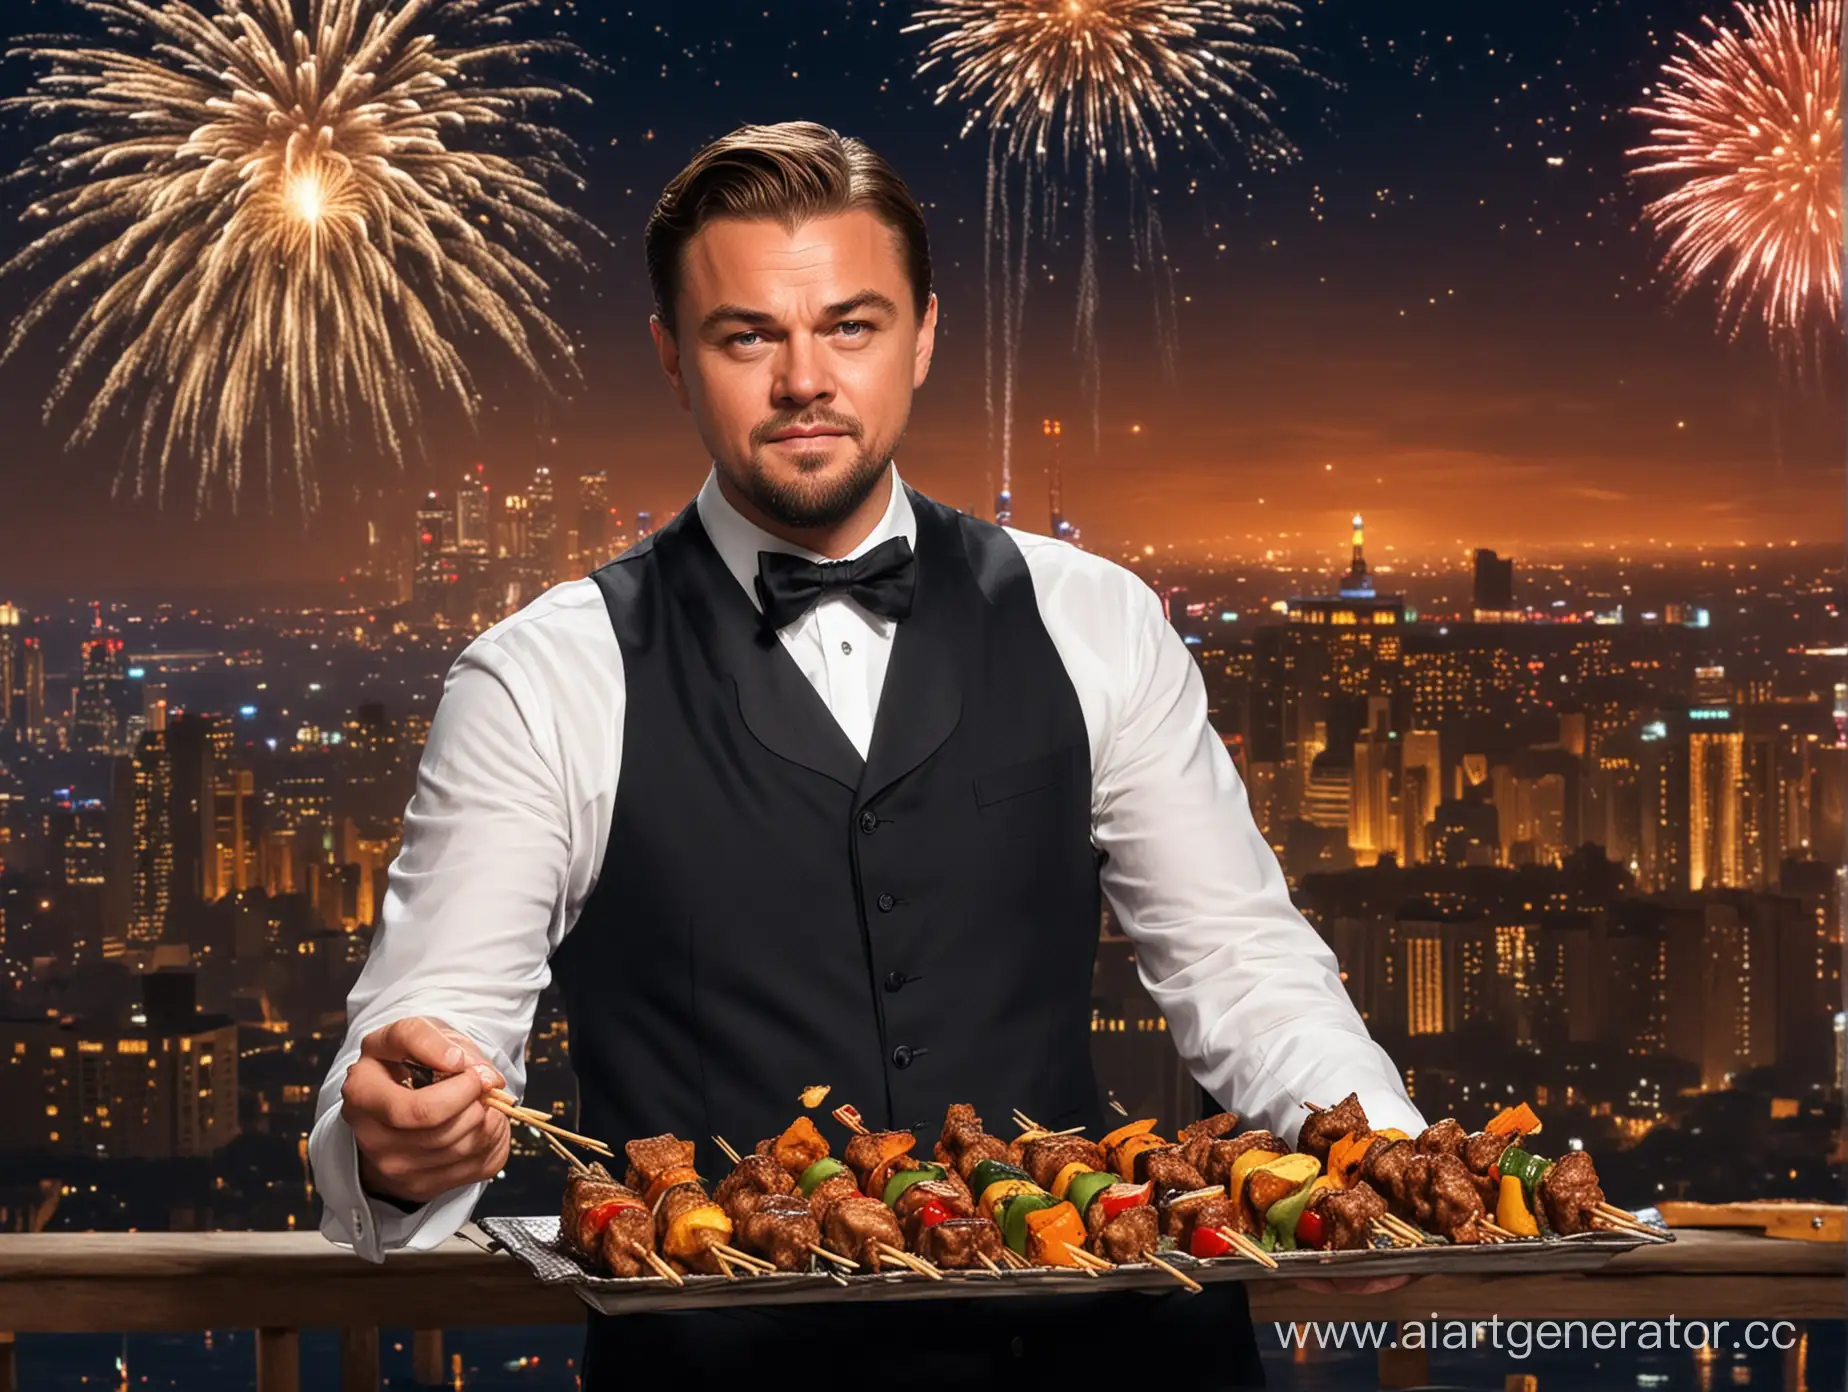 Leonardo-DiCaprio-Enjoying-Shish-Kebabs-Amidst-Fireworks-Spectacle